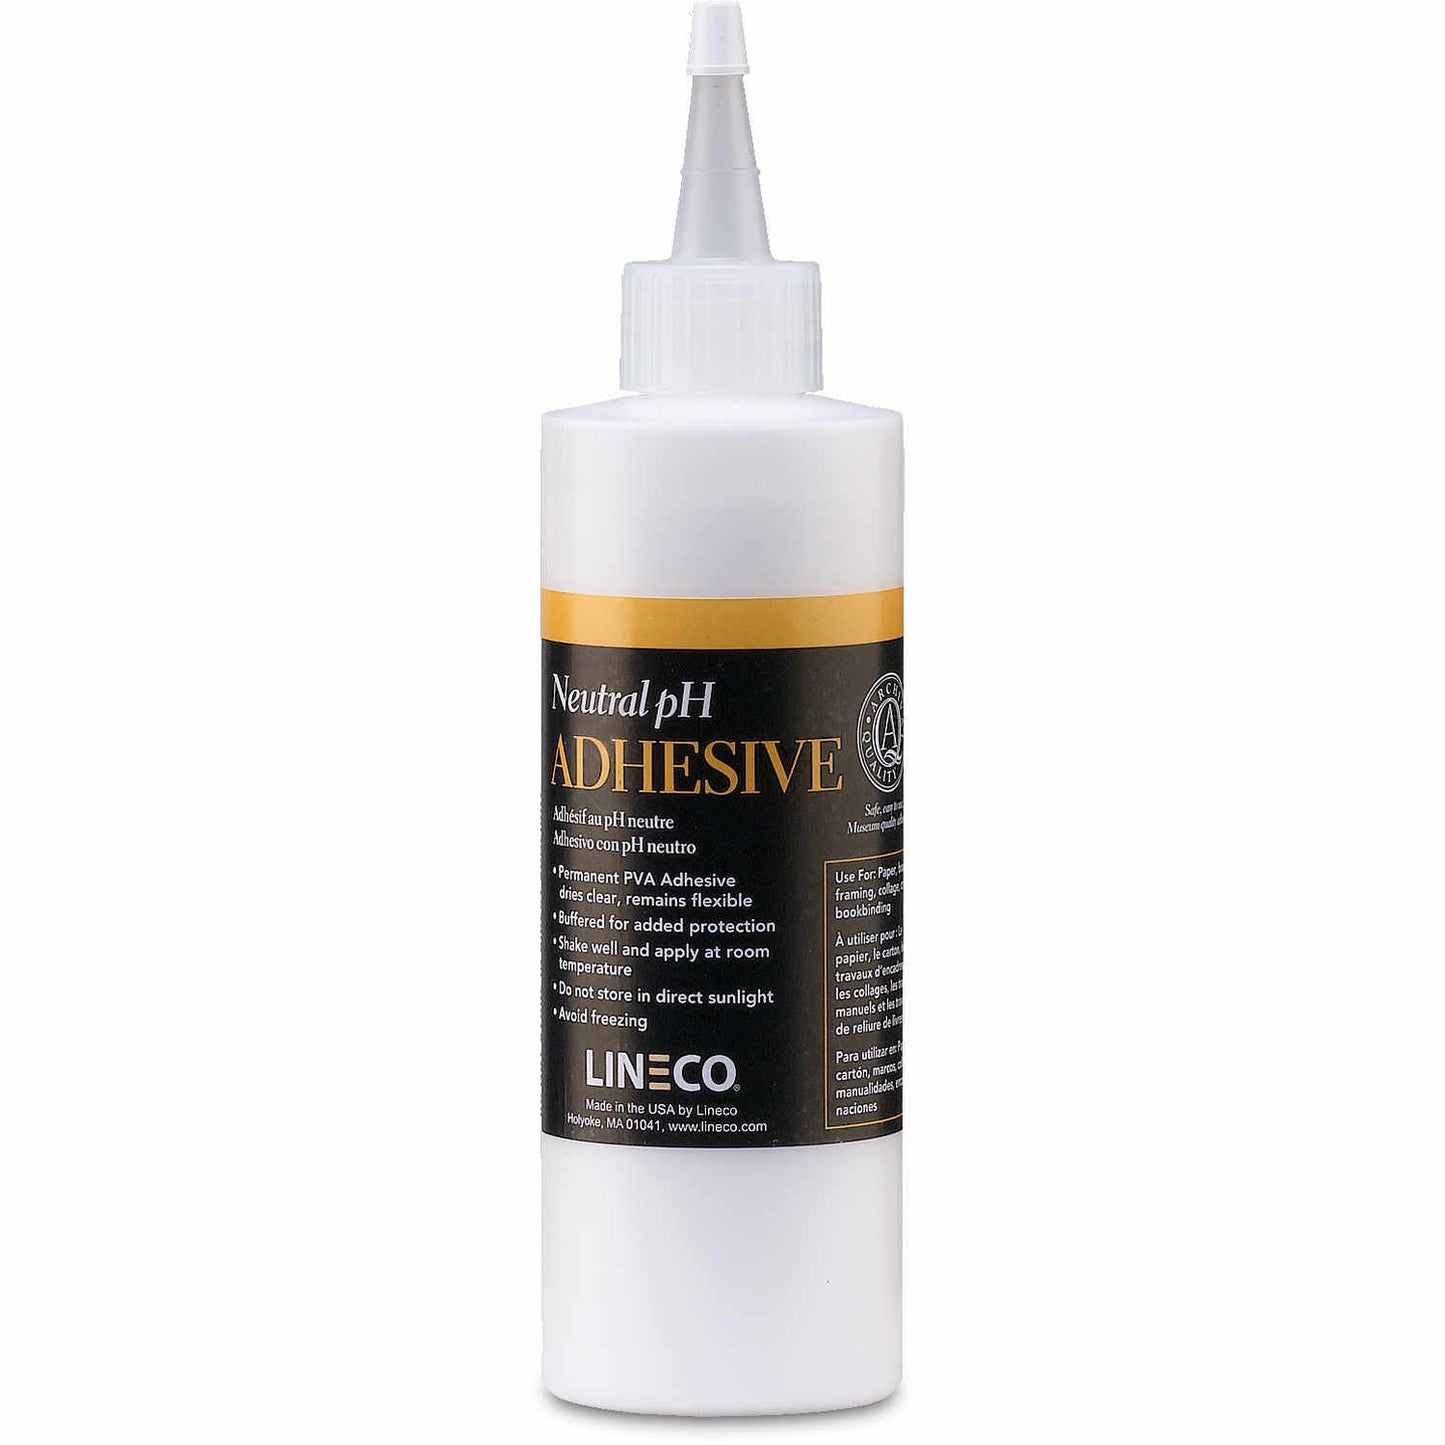 Lineco/Arcare : White Neutral PH Pva Adhesive - 1 Gallon Jar (128oz)